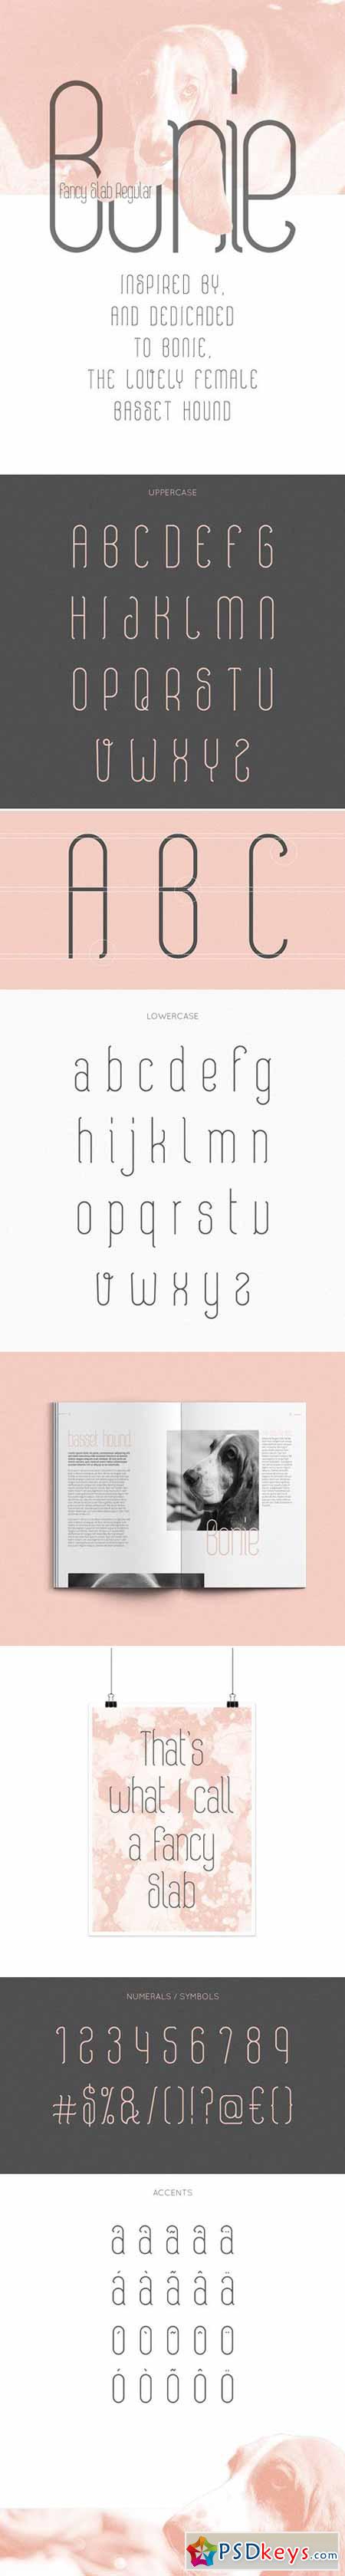 Bonie Typeface